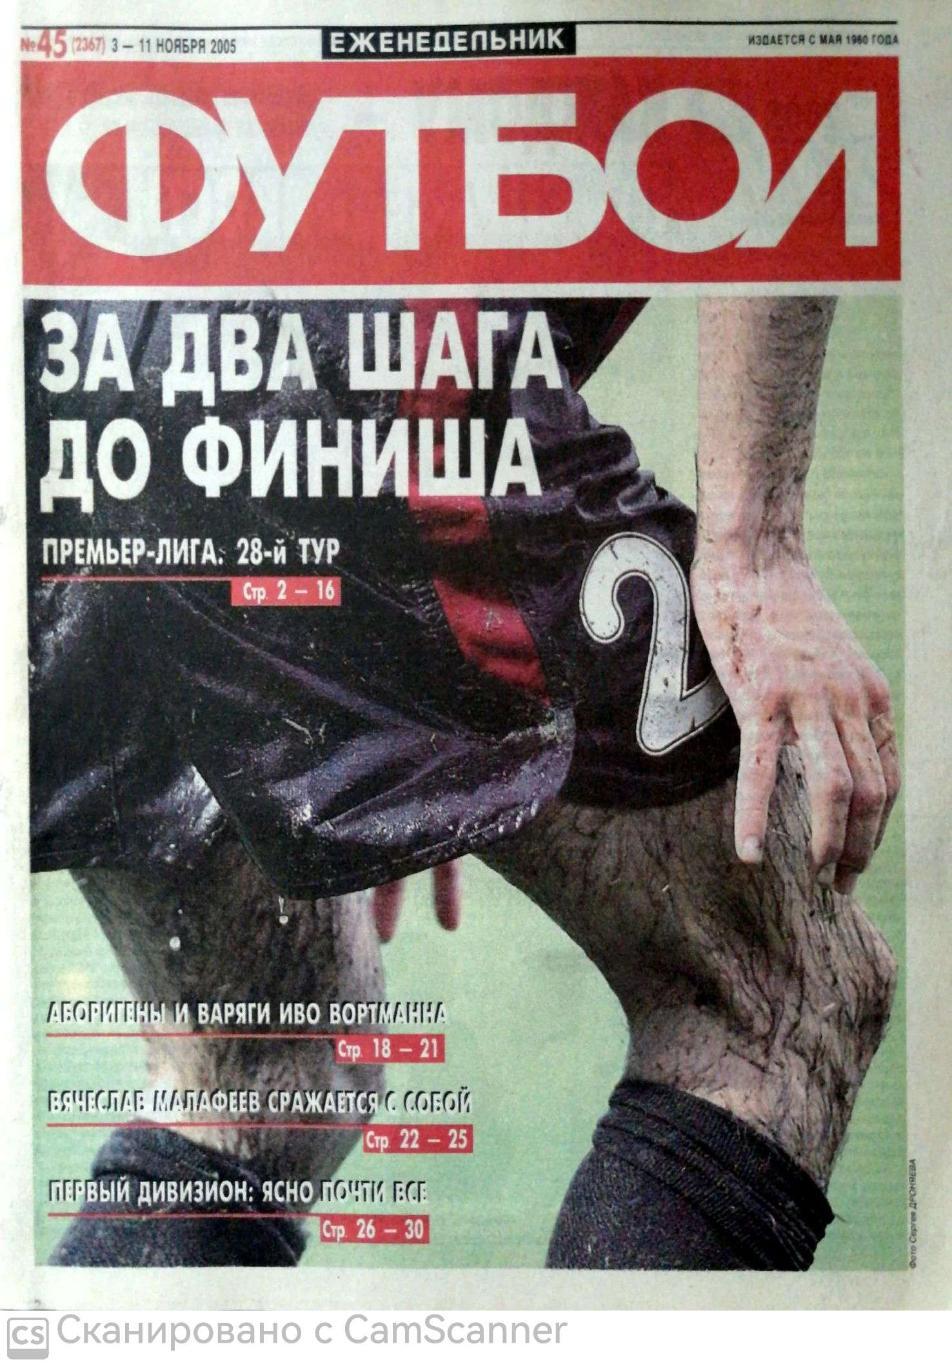 Еженедельник «Футбол» (Москва). 2005 год. №45